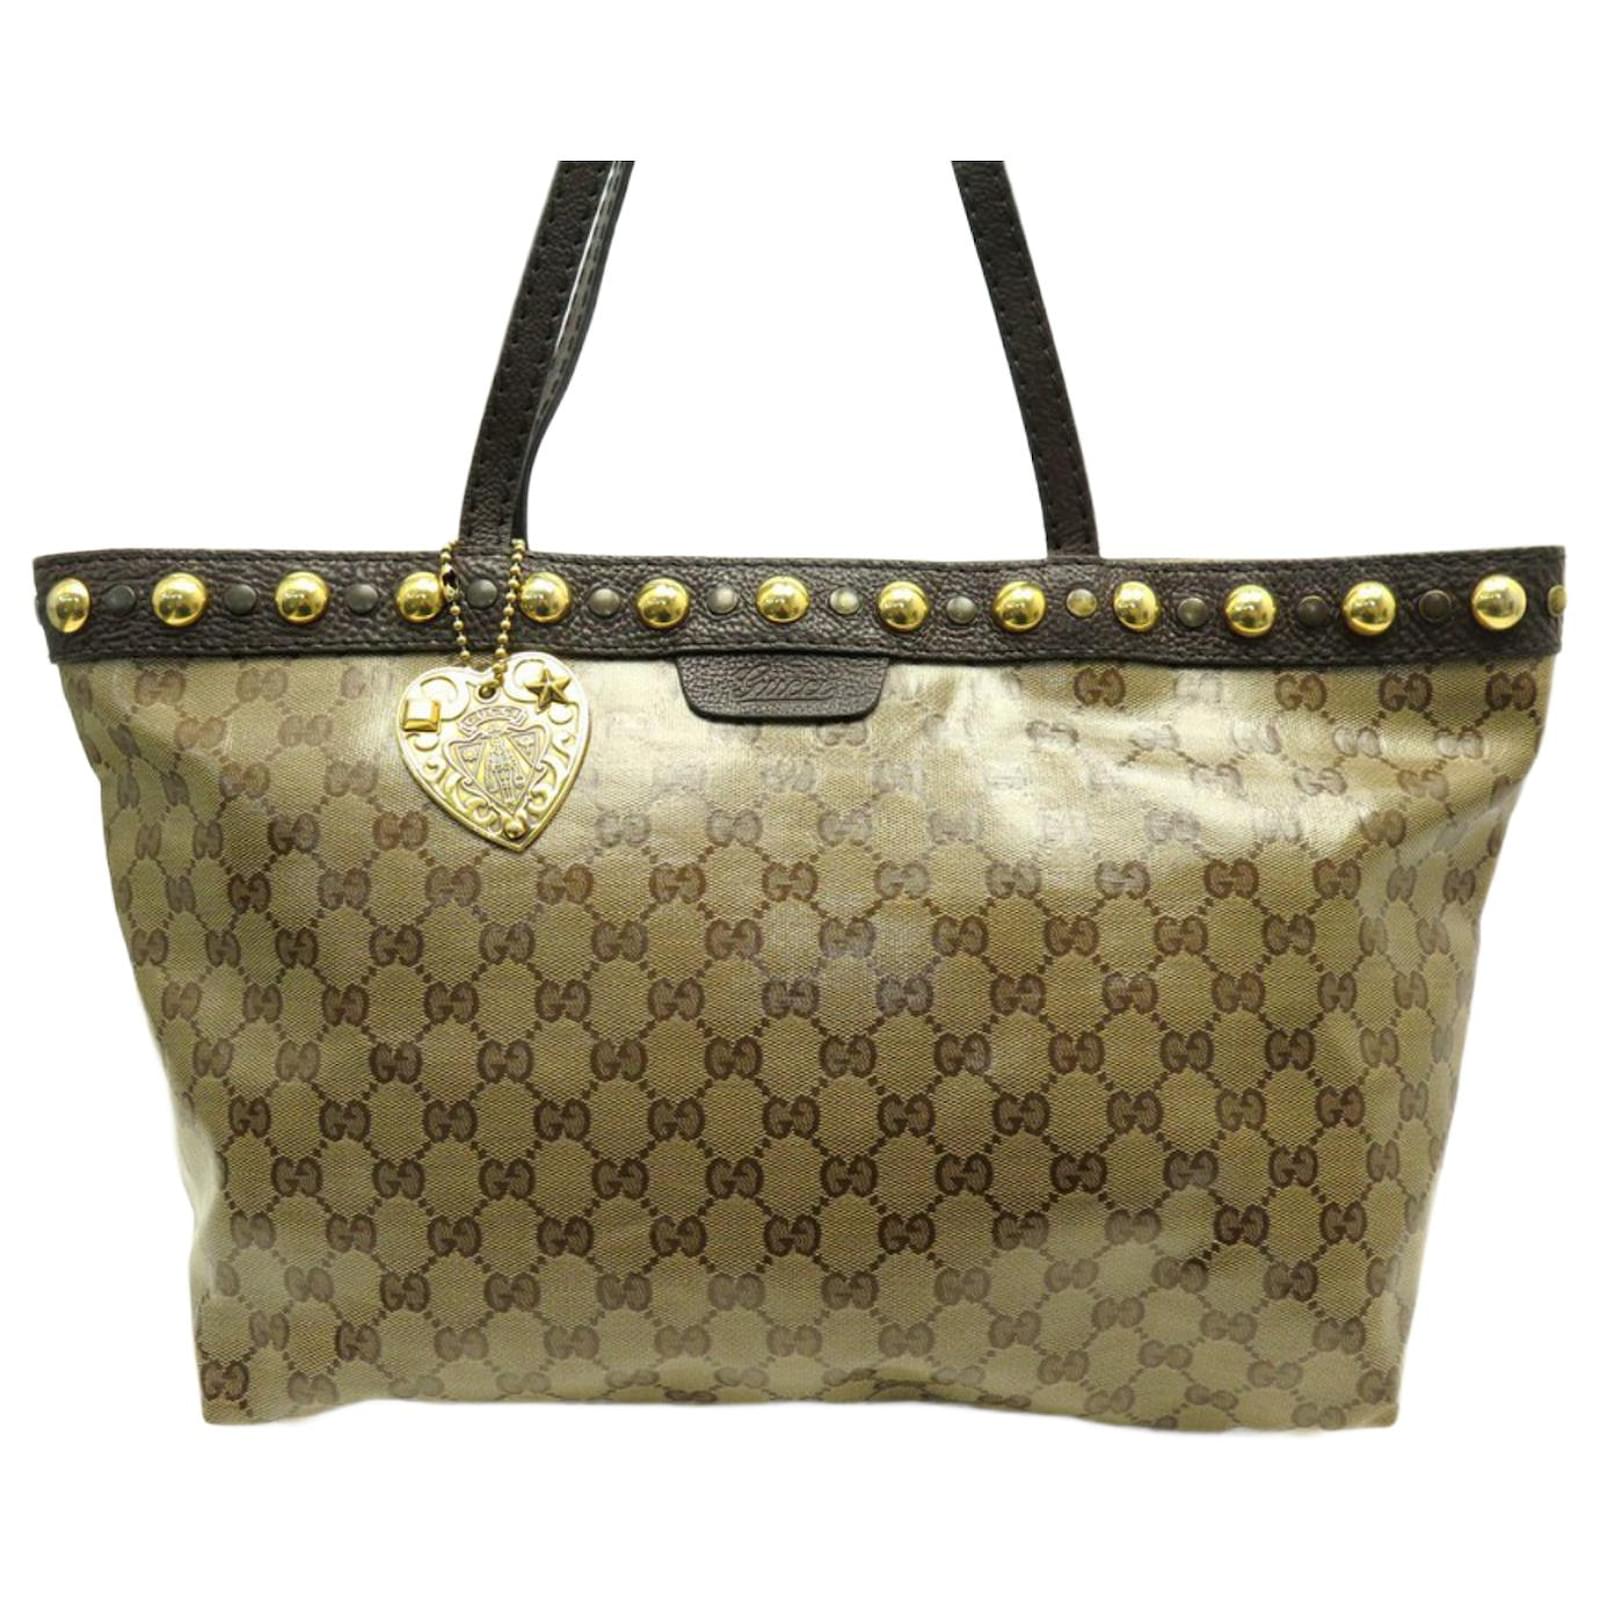 481 Gucci Woman Handbags Images, Stock Photos & Vectors | Shutterstock